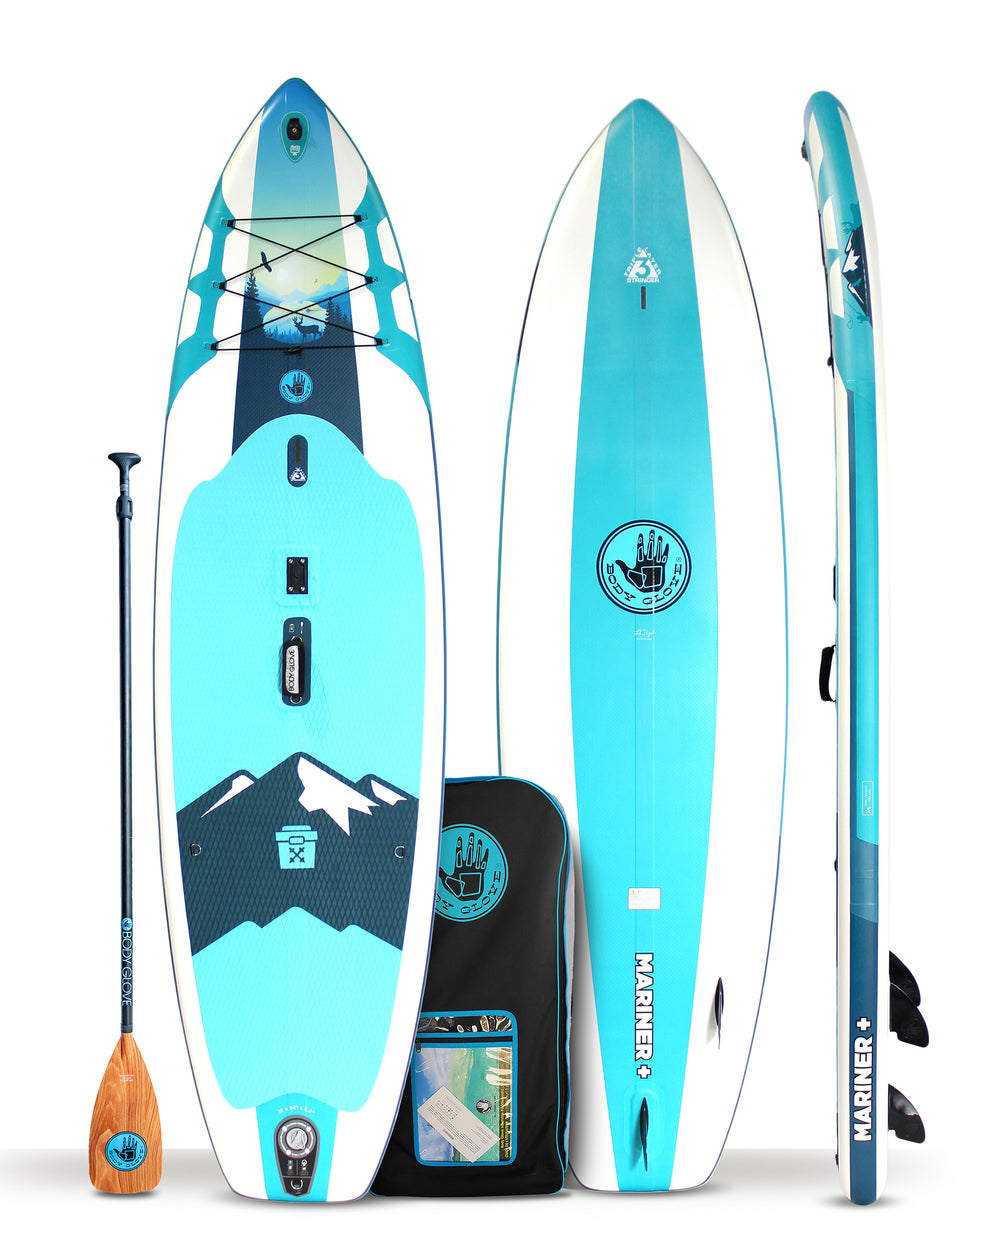 Mariner+ 11' Inflatable Paddle Board - Aqua/White